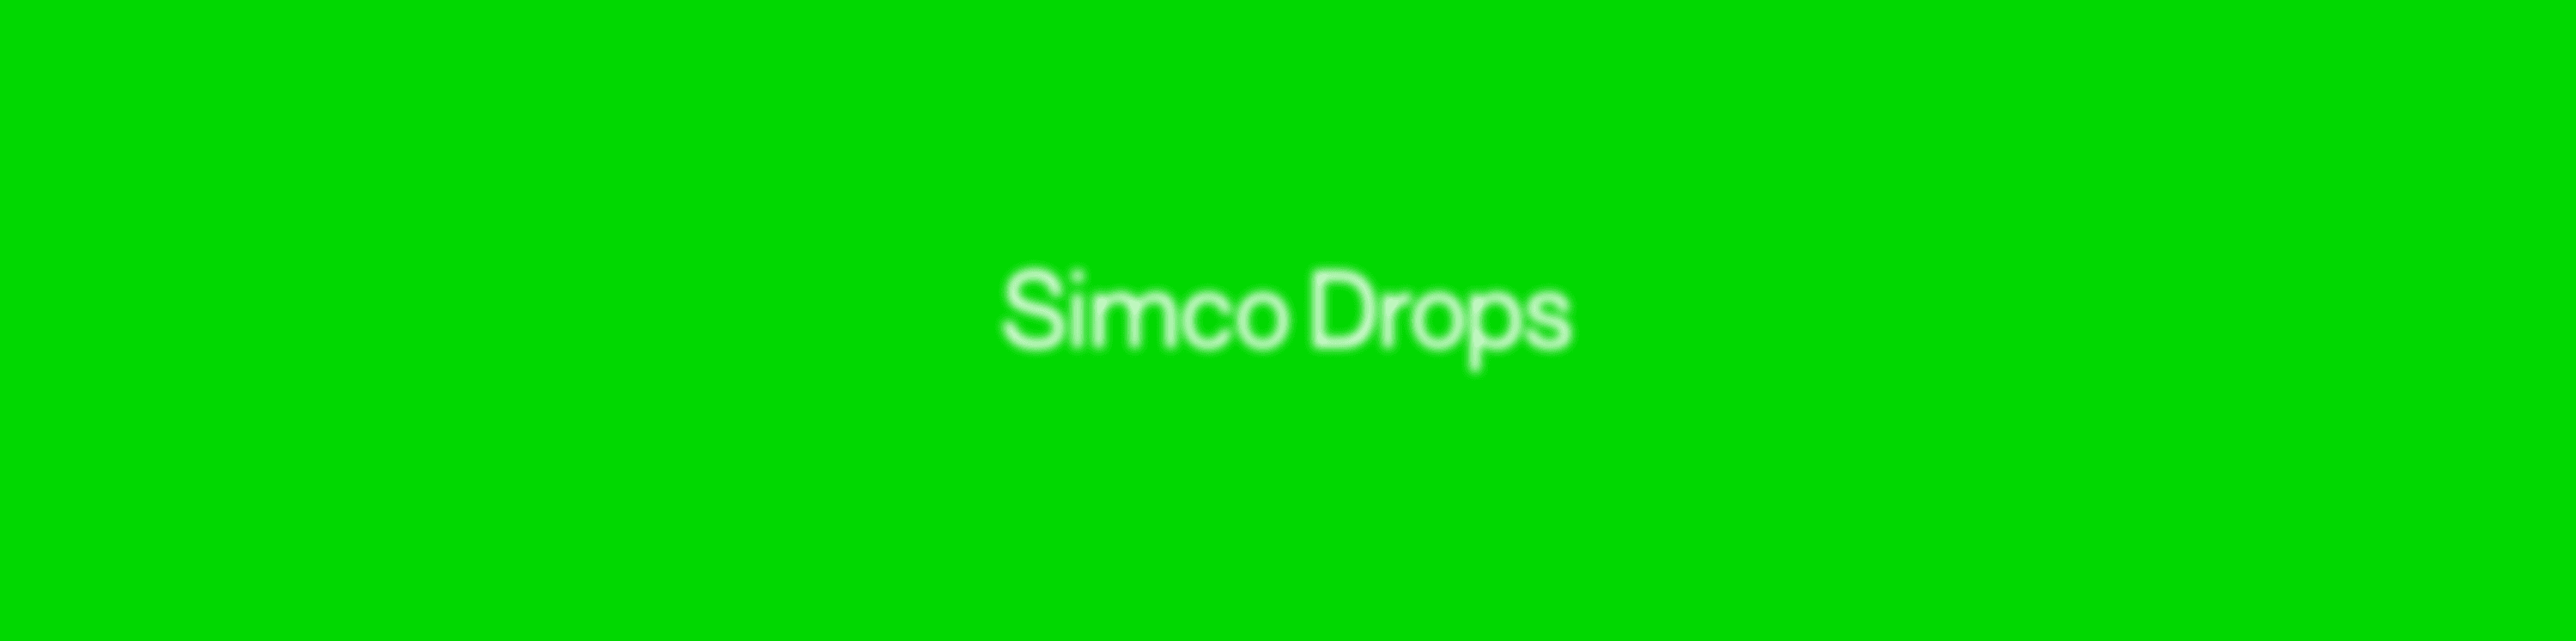 SimcoDrops banner